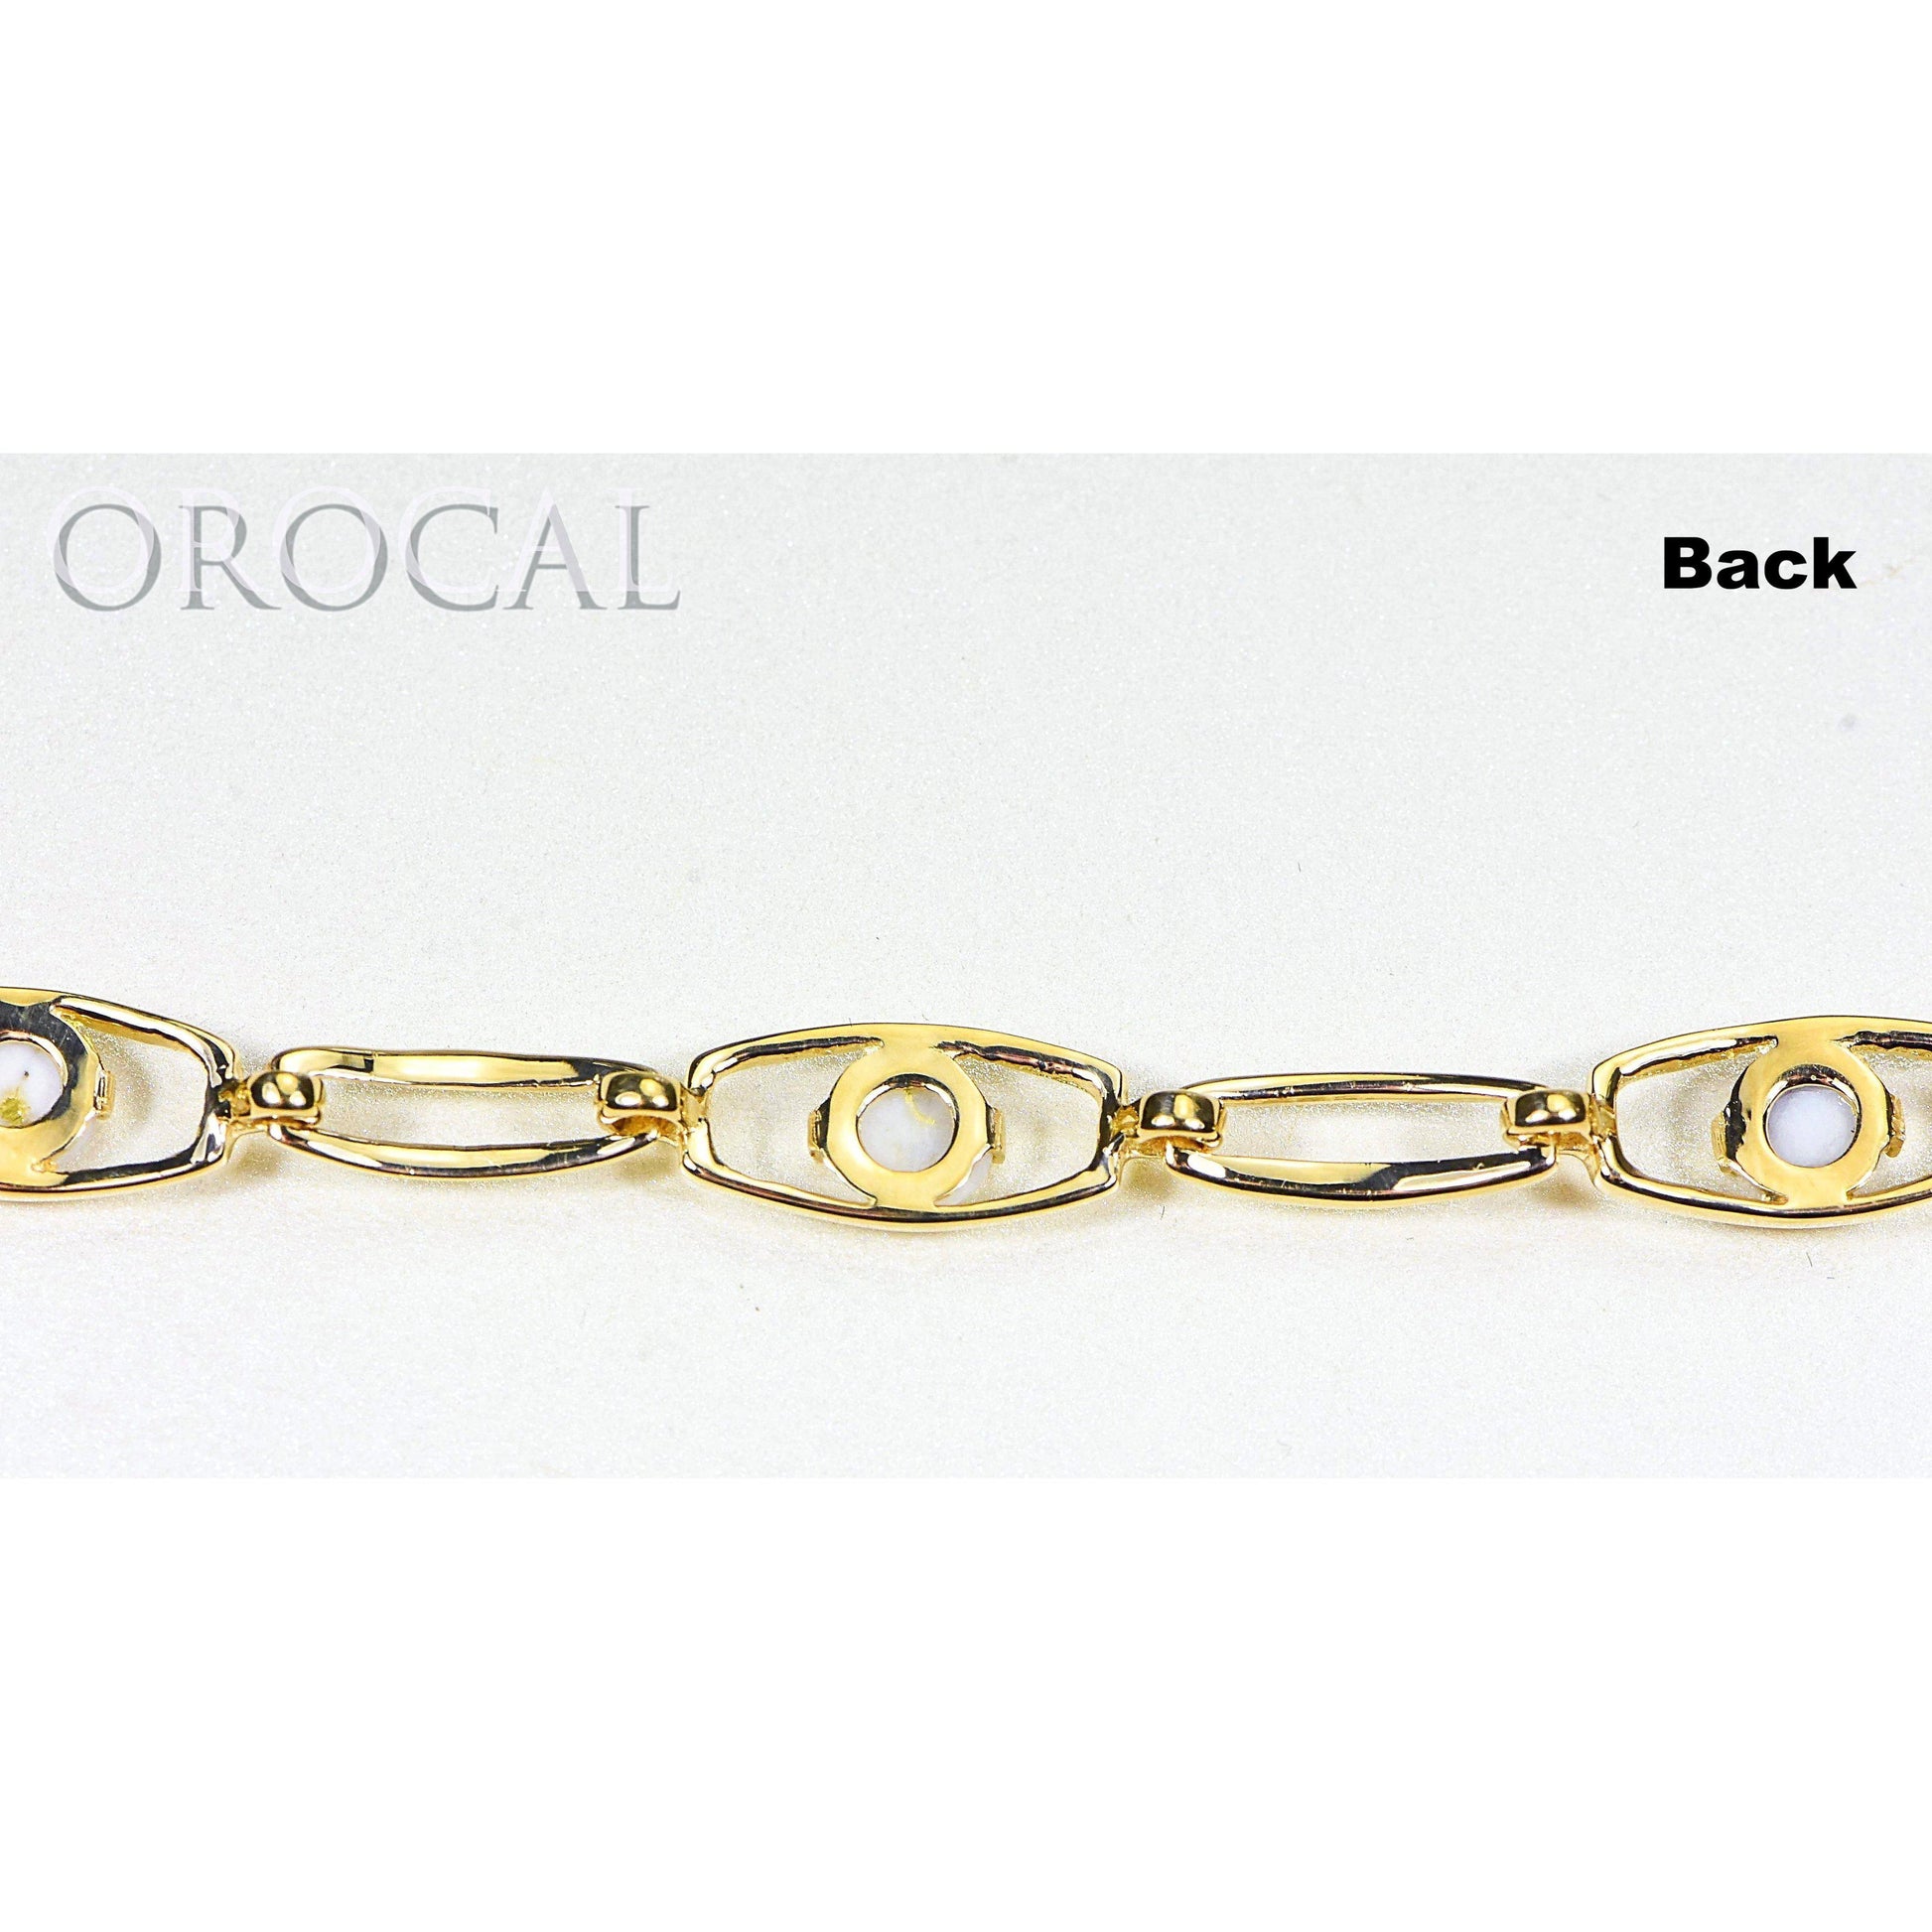 Gold Quartz Bracelet with Diamonds - BDLOV5LHQC89-Destination Gold Detectors